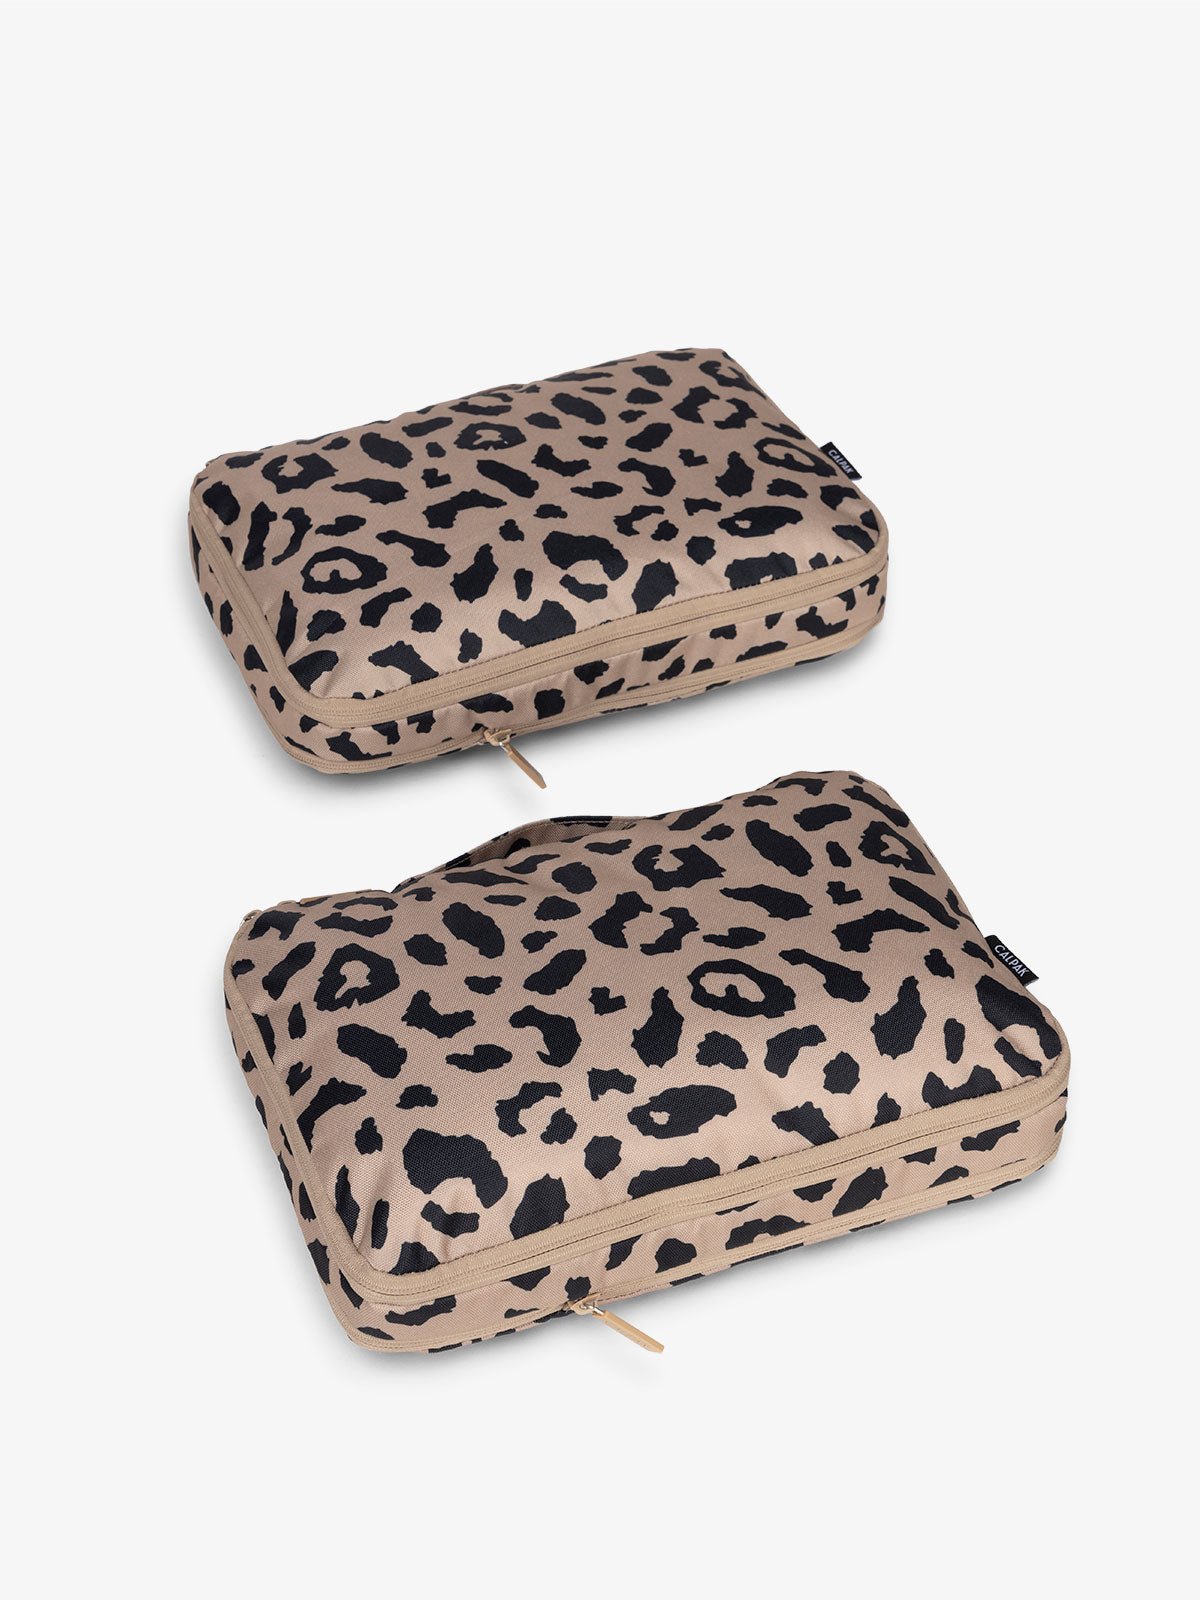 CALPAK compression packing cubes in cheetah